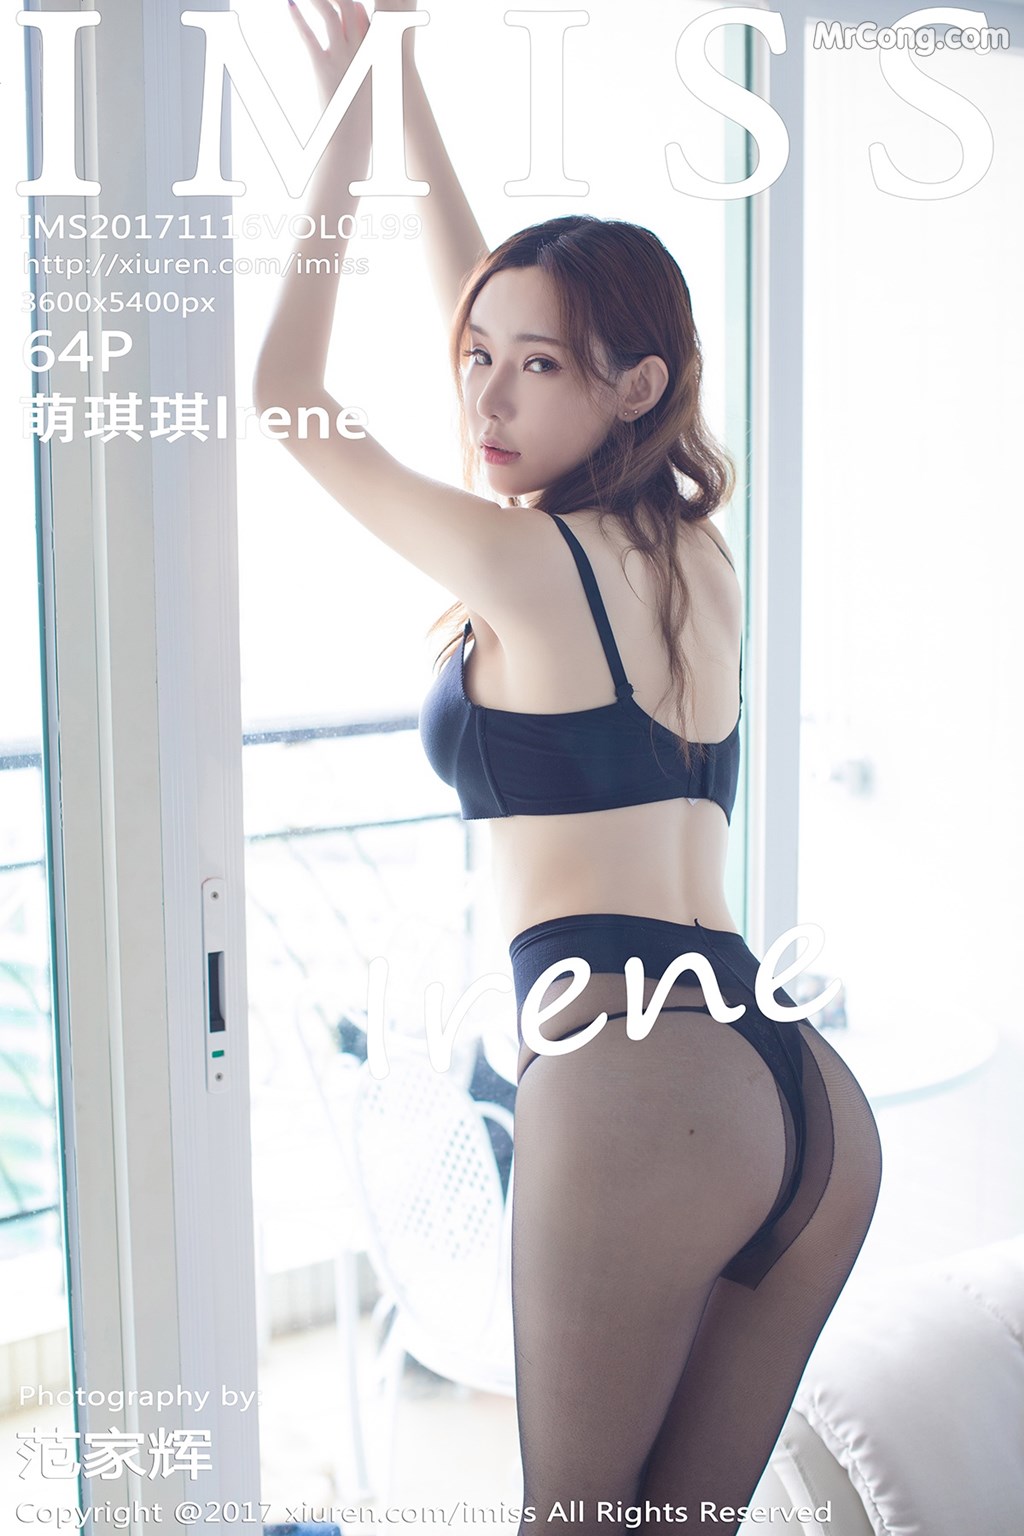 IMISS Vol.199: Model Irene (萌 琪琪) (65 photos)